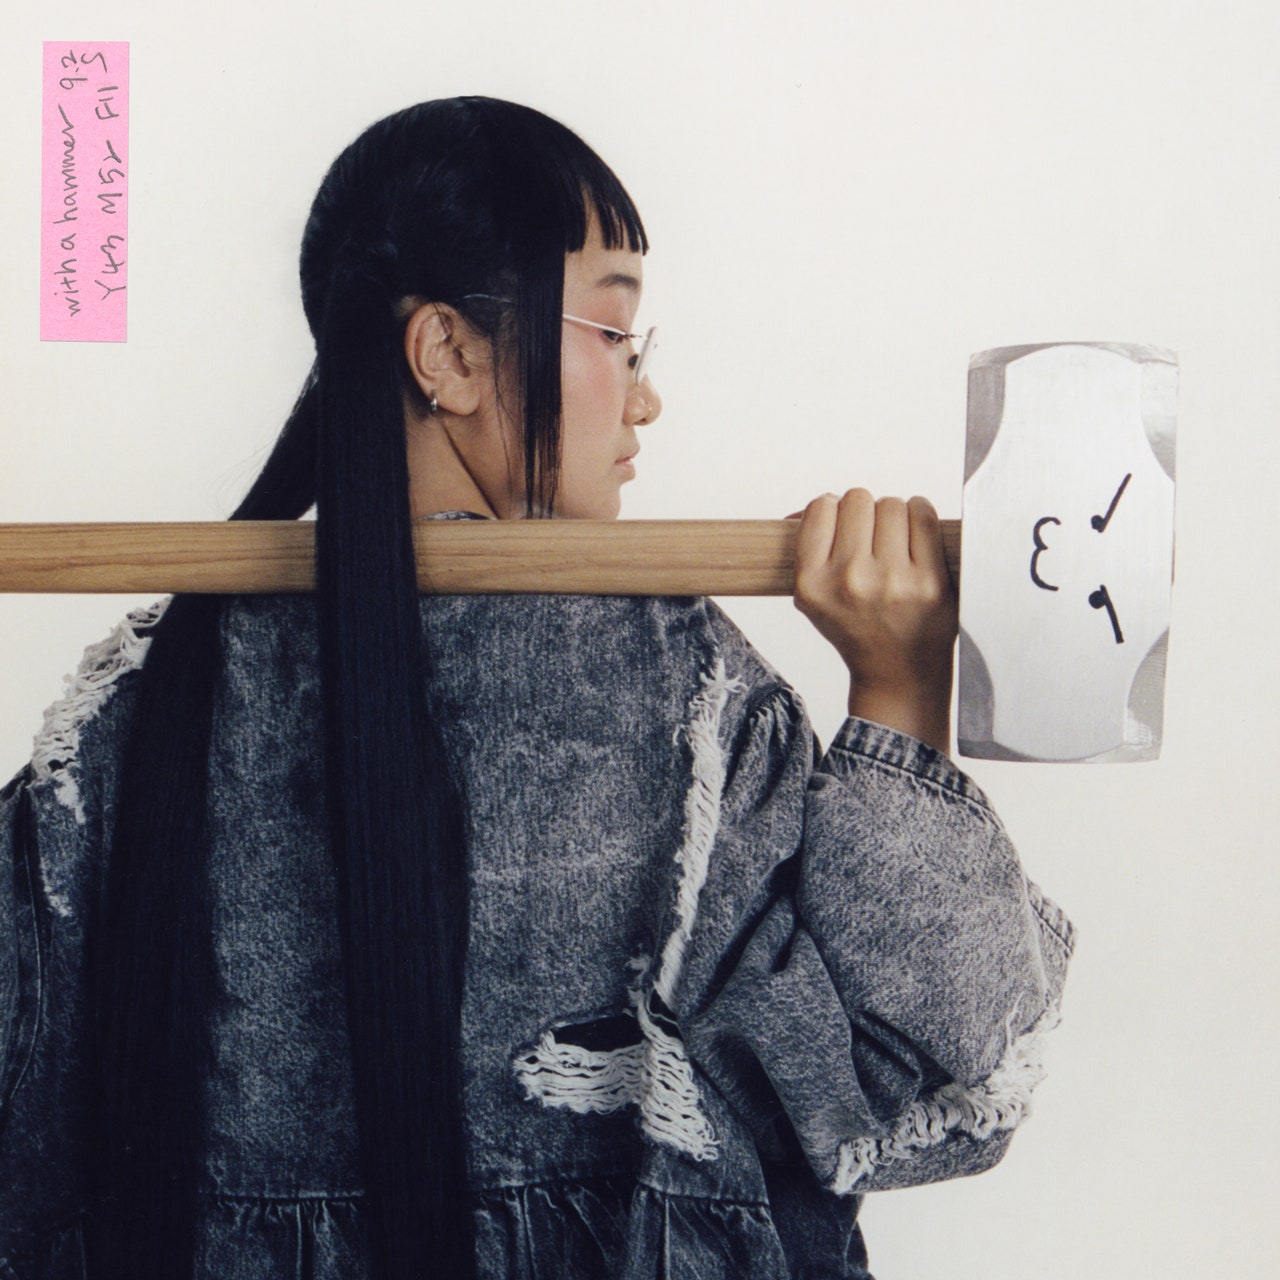 yaeji with a hammer album artwork